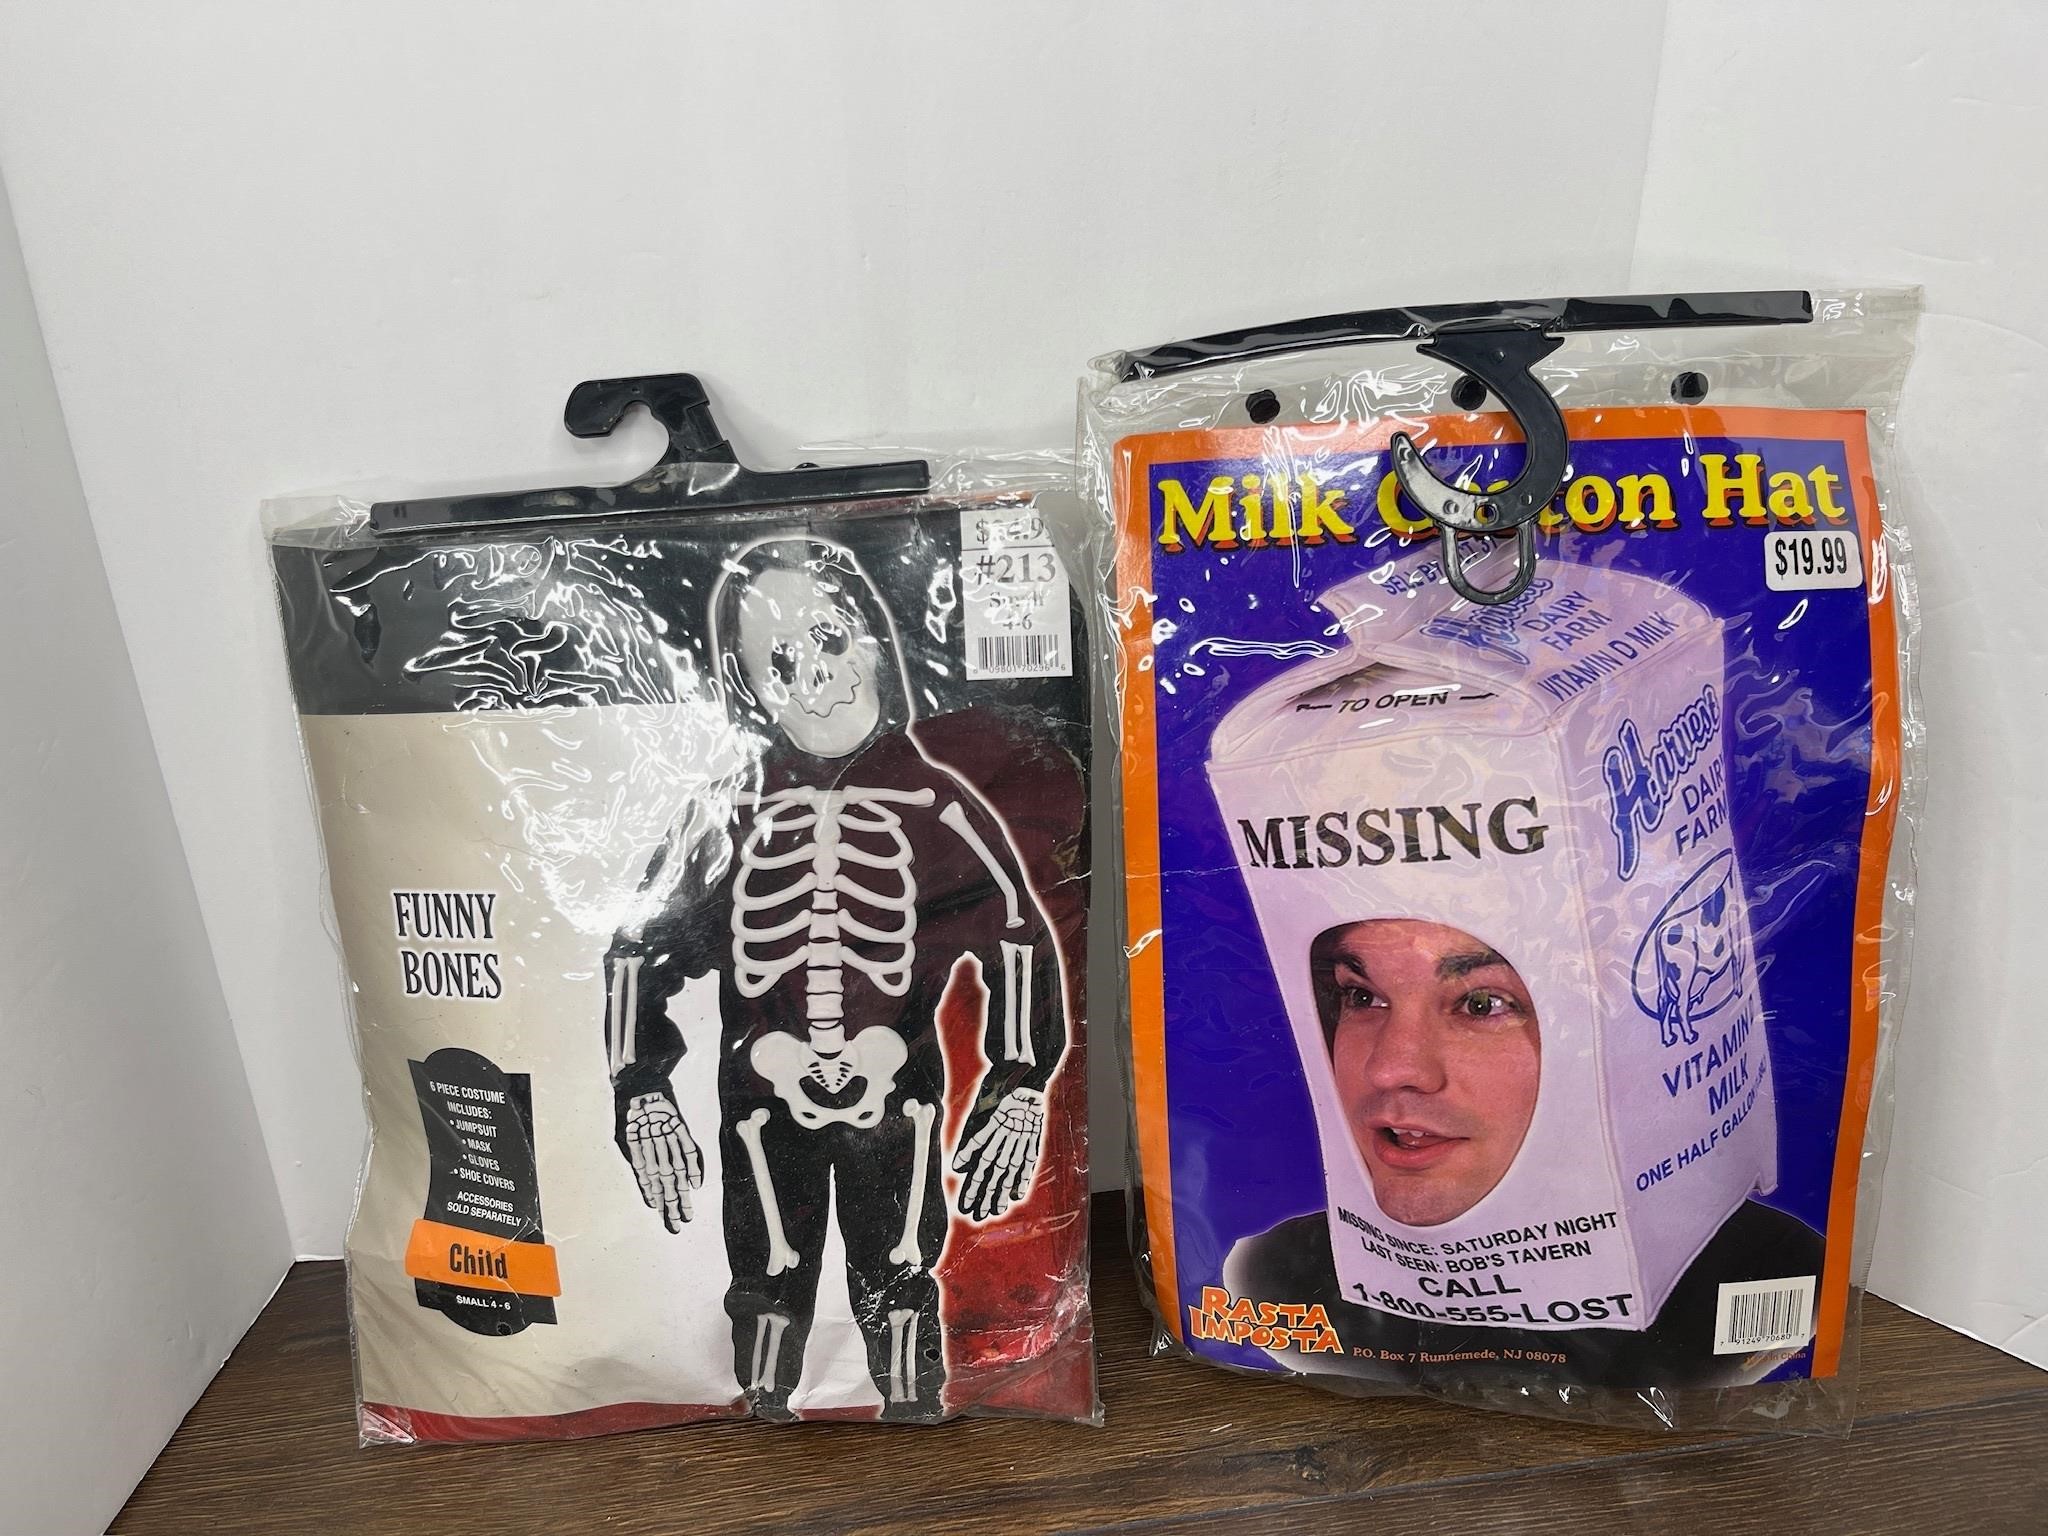 Funny Bones Costume Child Sz Small Milk Carton Hat